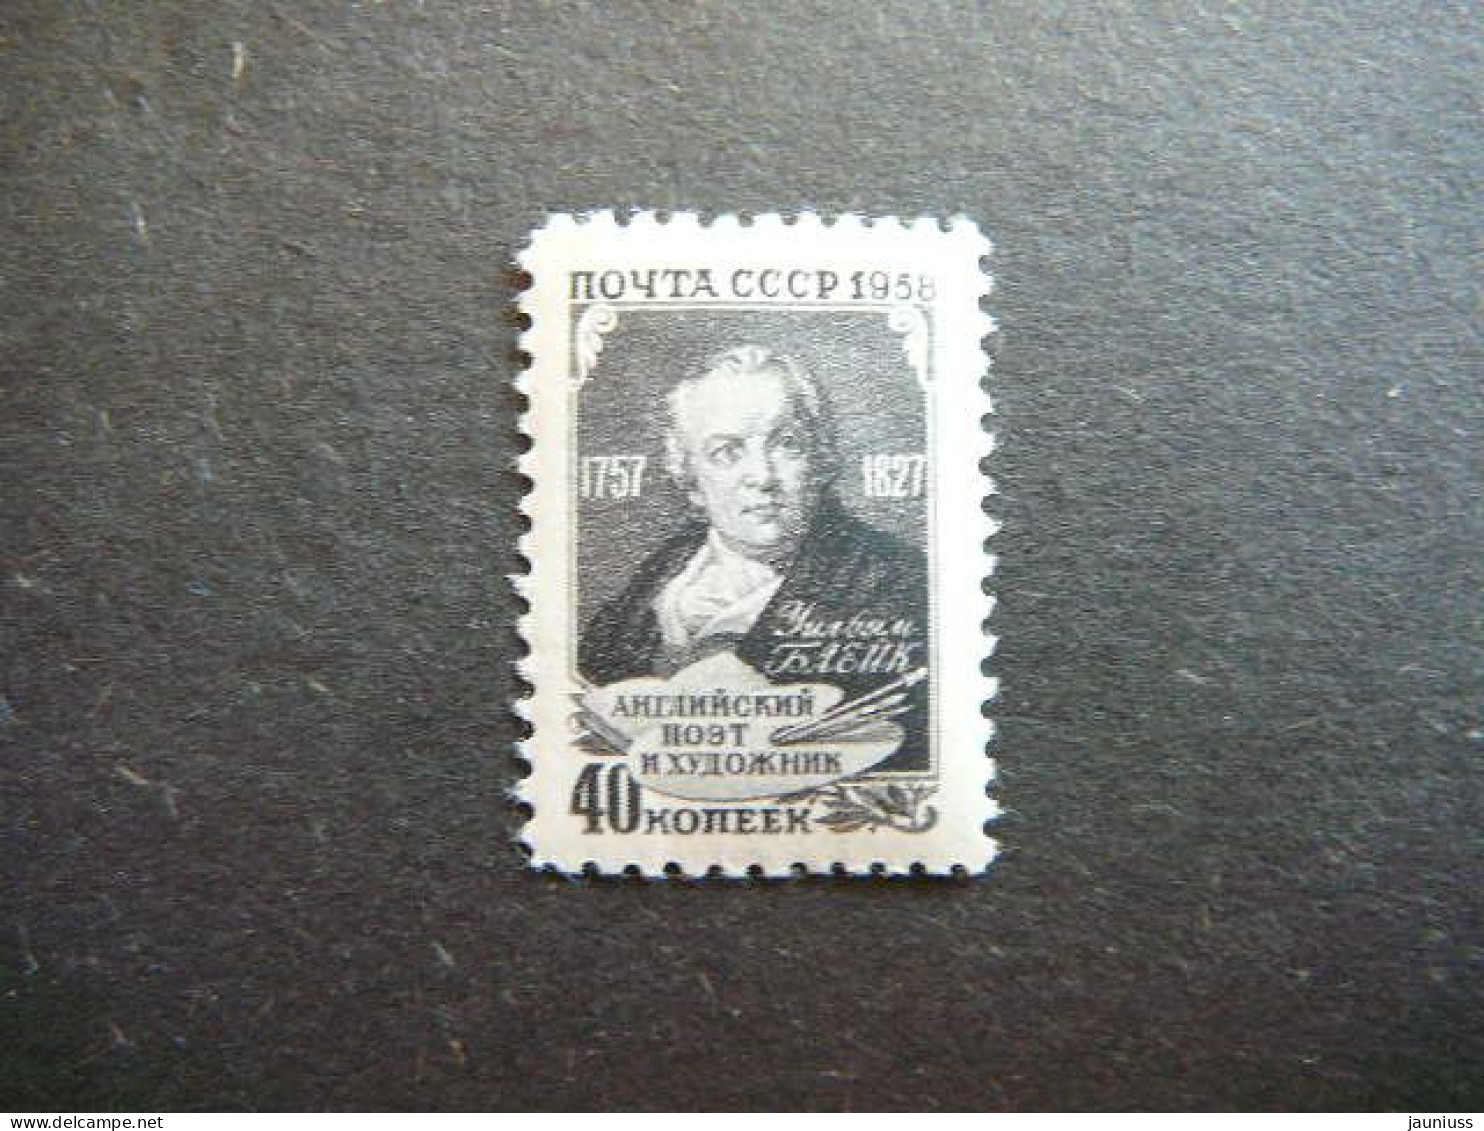 William Blake # Russia USSR Sowjetunion # 1958 MNH # Mi.2060 - Unused Stamps